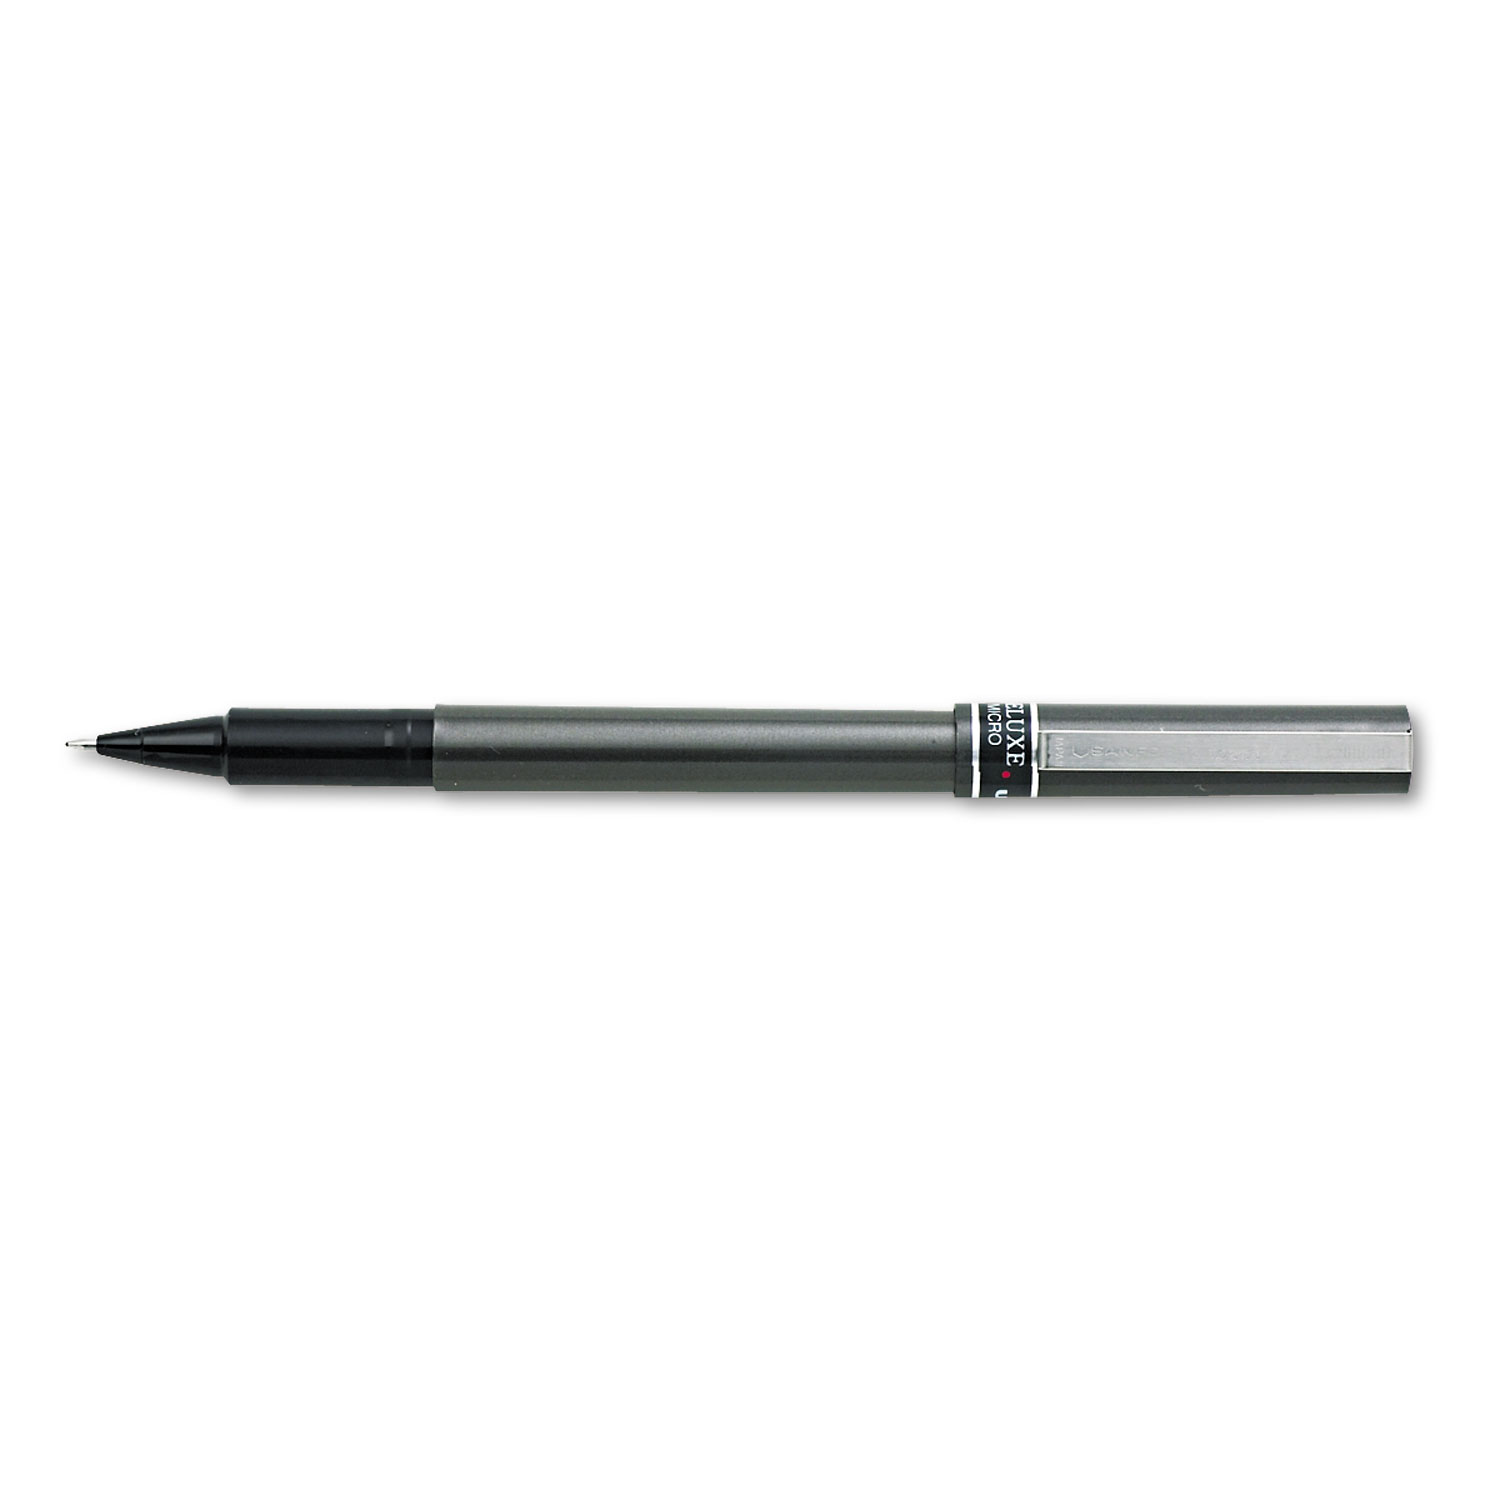  uni-ball 60025 Deluxe Stick Roller Ball Pen, Micro 0.5mm, Black Ink, Metallic Gray Barrel, Dozen (UBC60025) 